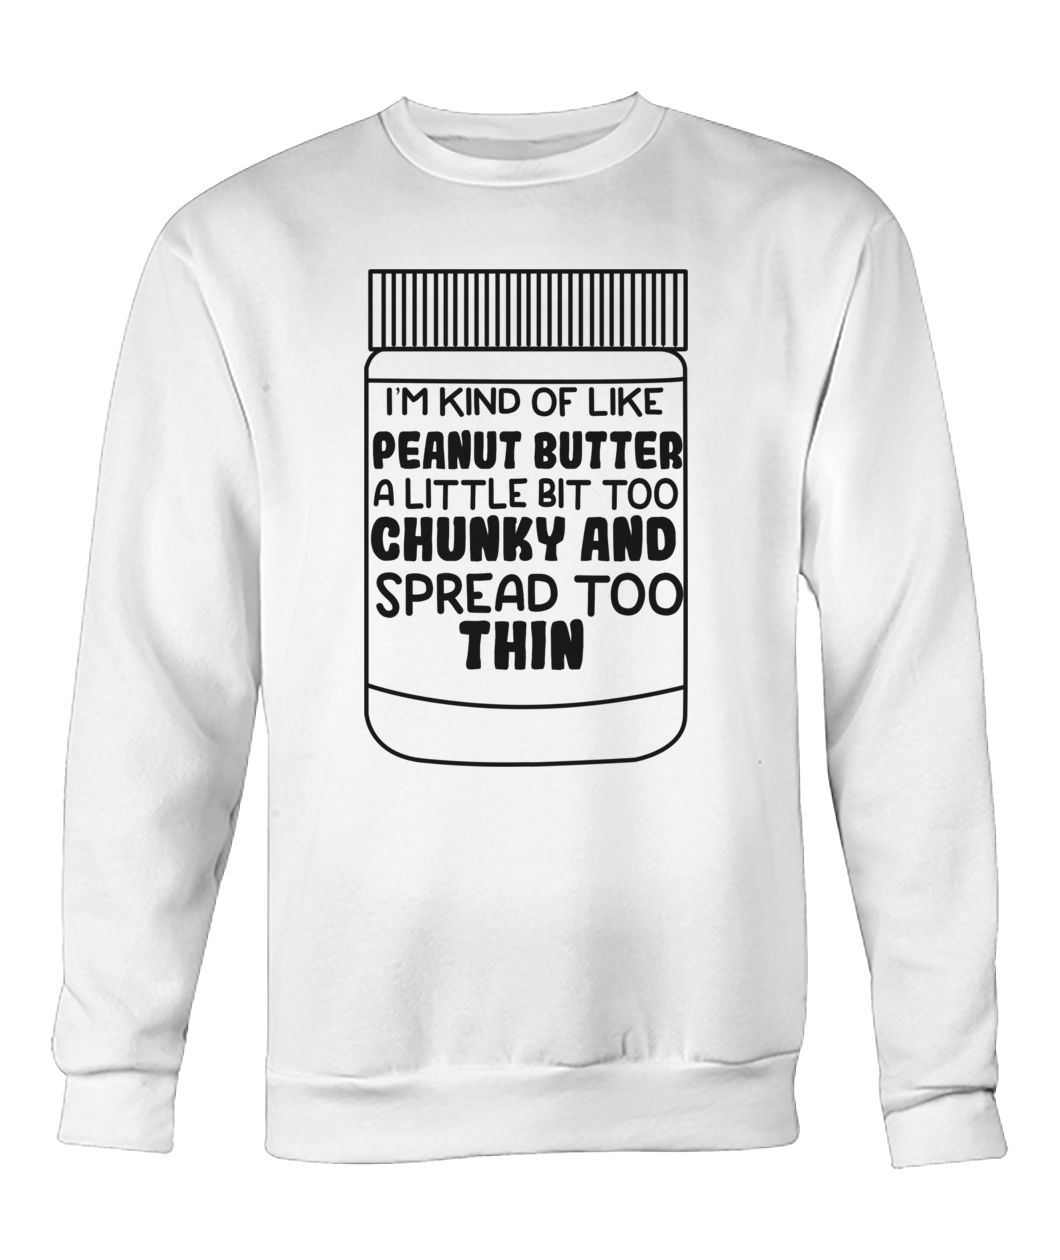 I'm kind of like peanut butter a little bit too chunky and spread too thin sweatshirt